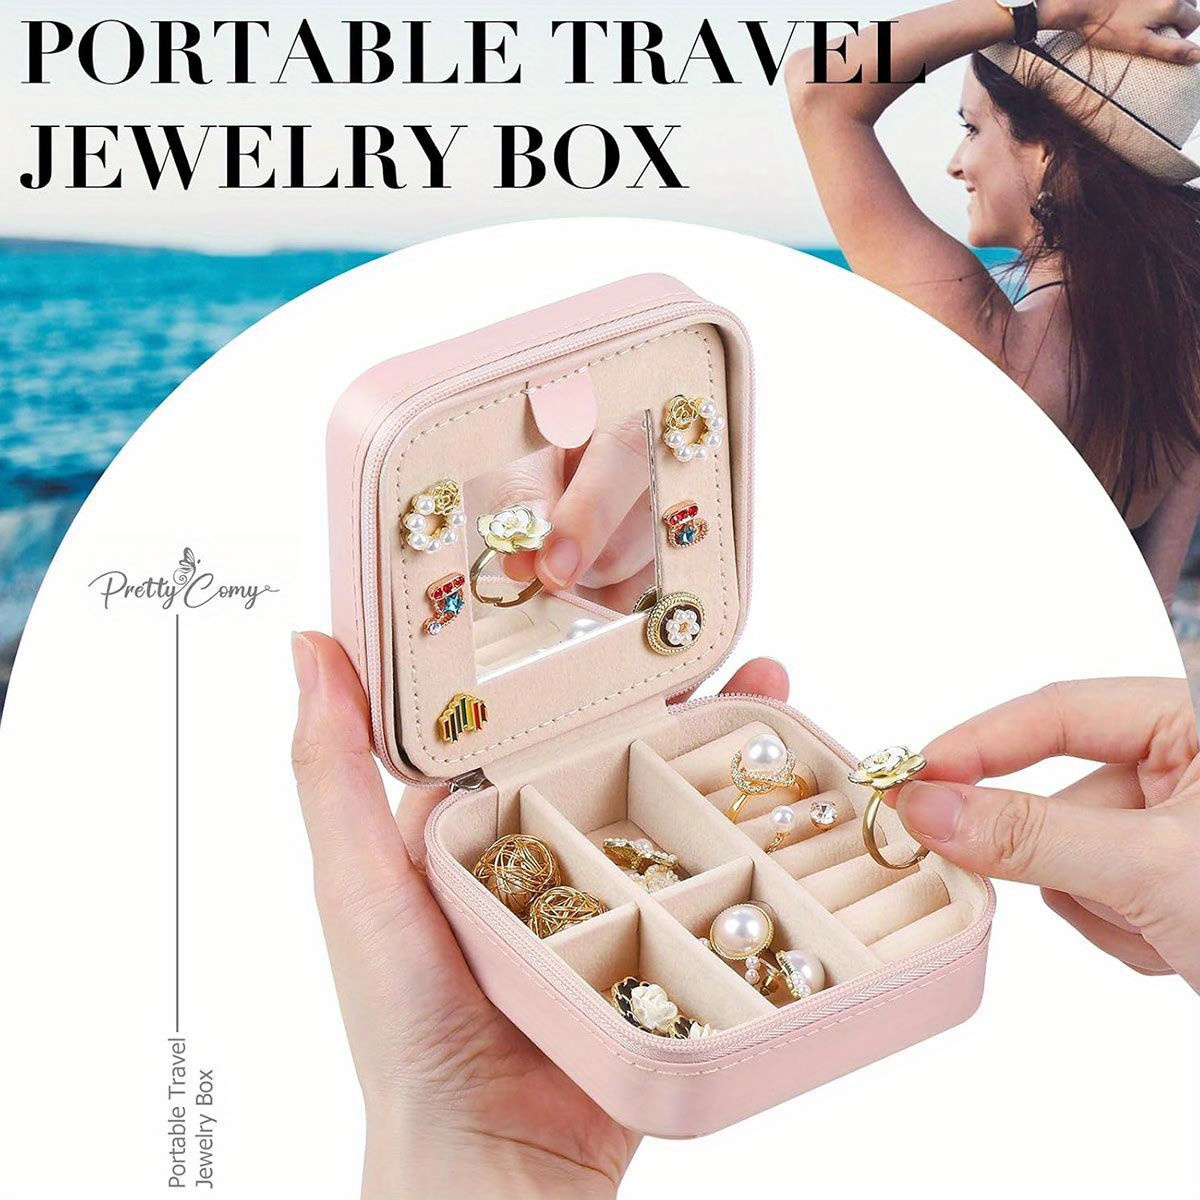 Parima Travel Jewelry Box Jewelry Case - Jewelry Travel Organizer, Travel  Jewelry Case Small Jewelry Box, Personalized Jewelry Box for Women, Travel Gifts for Women